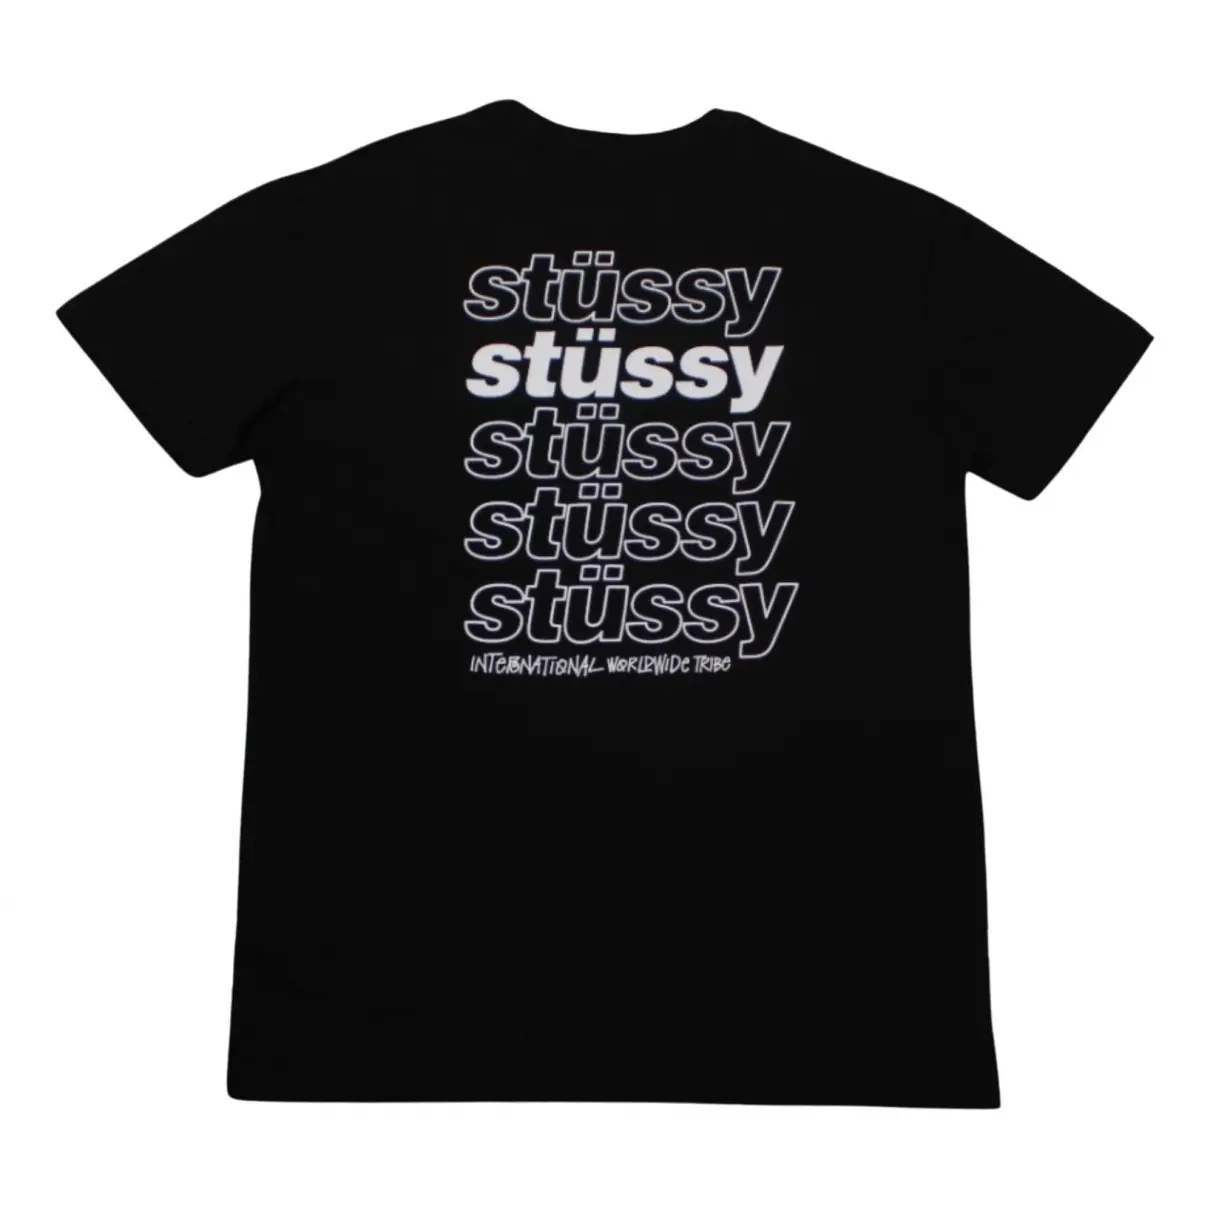 Buy Stussy T-shirt online